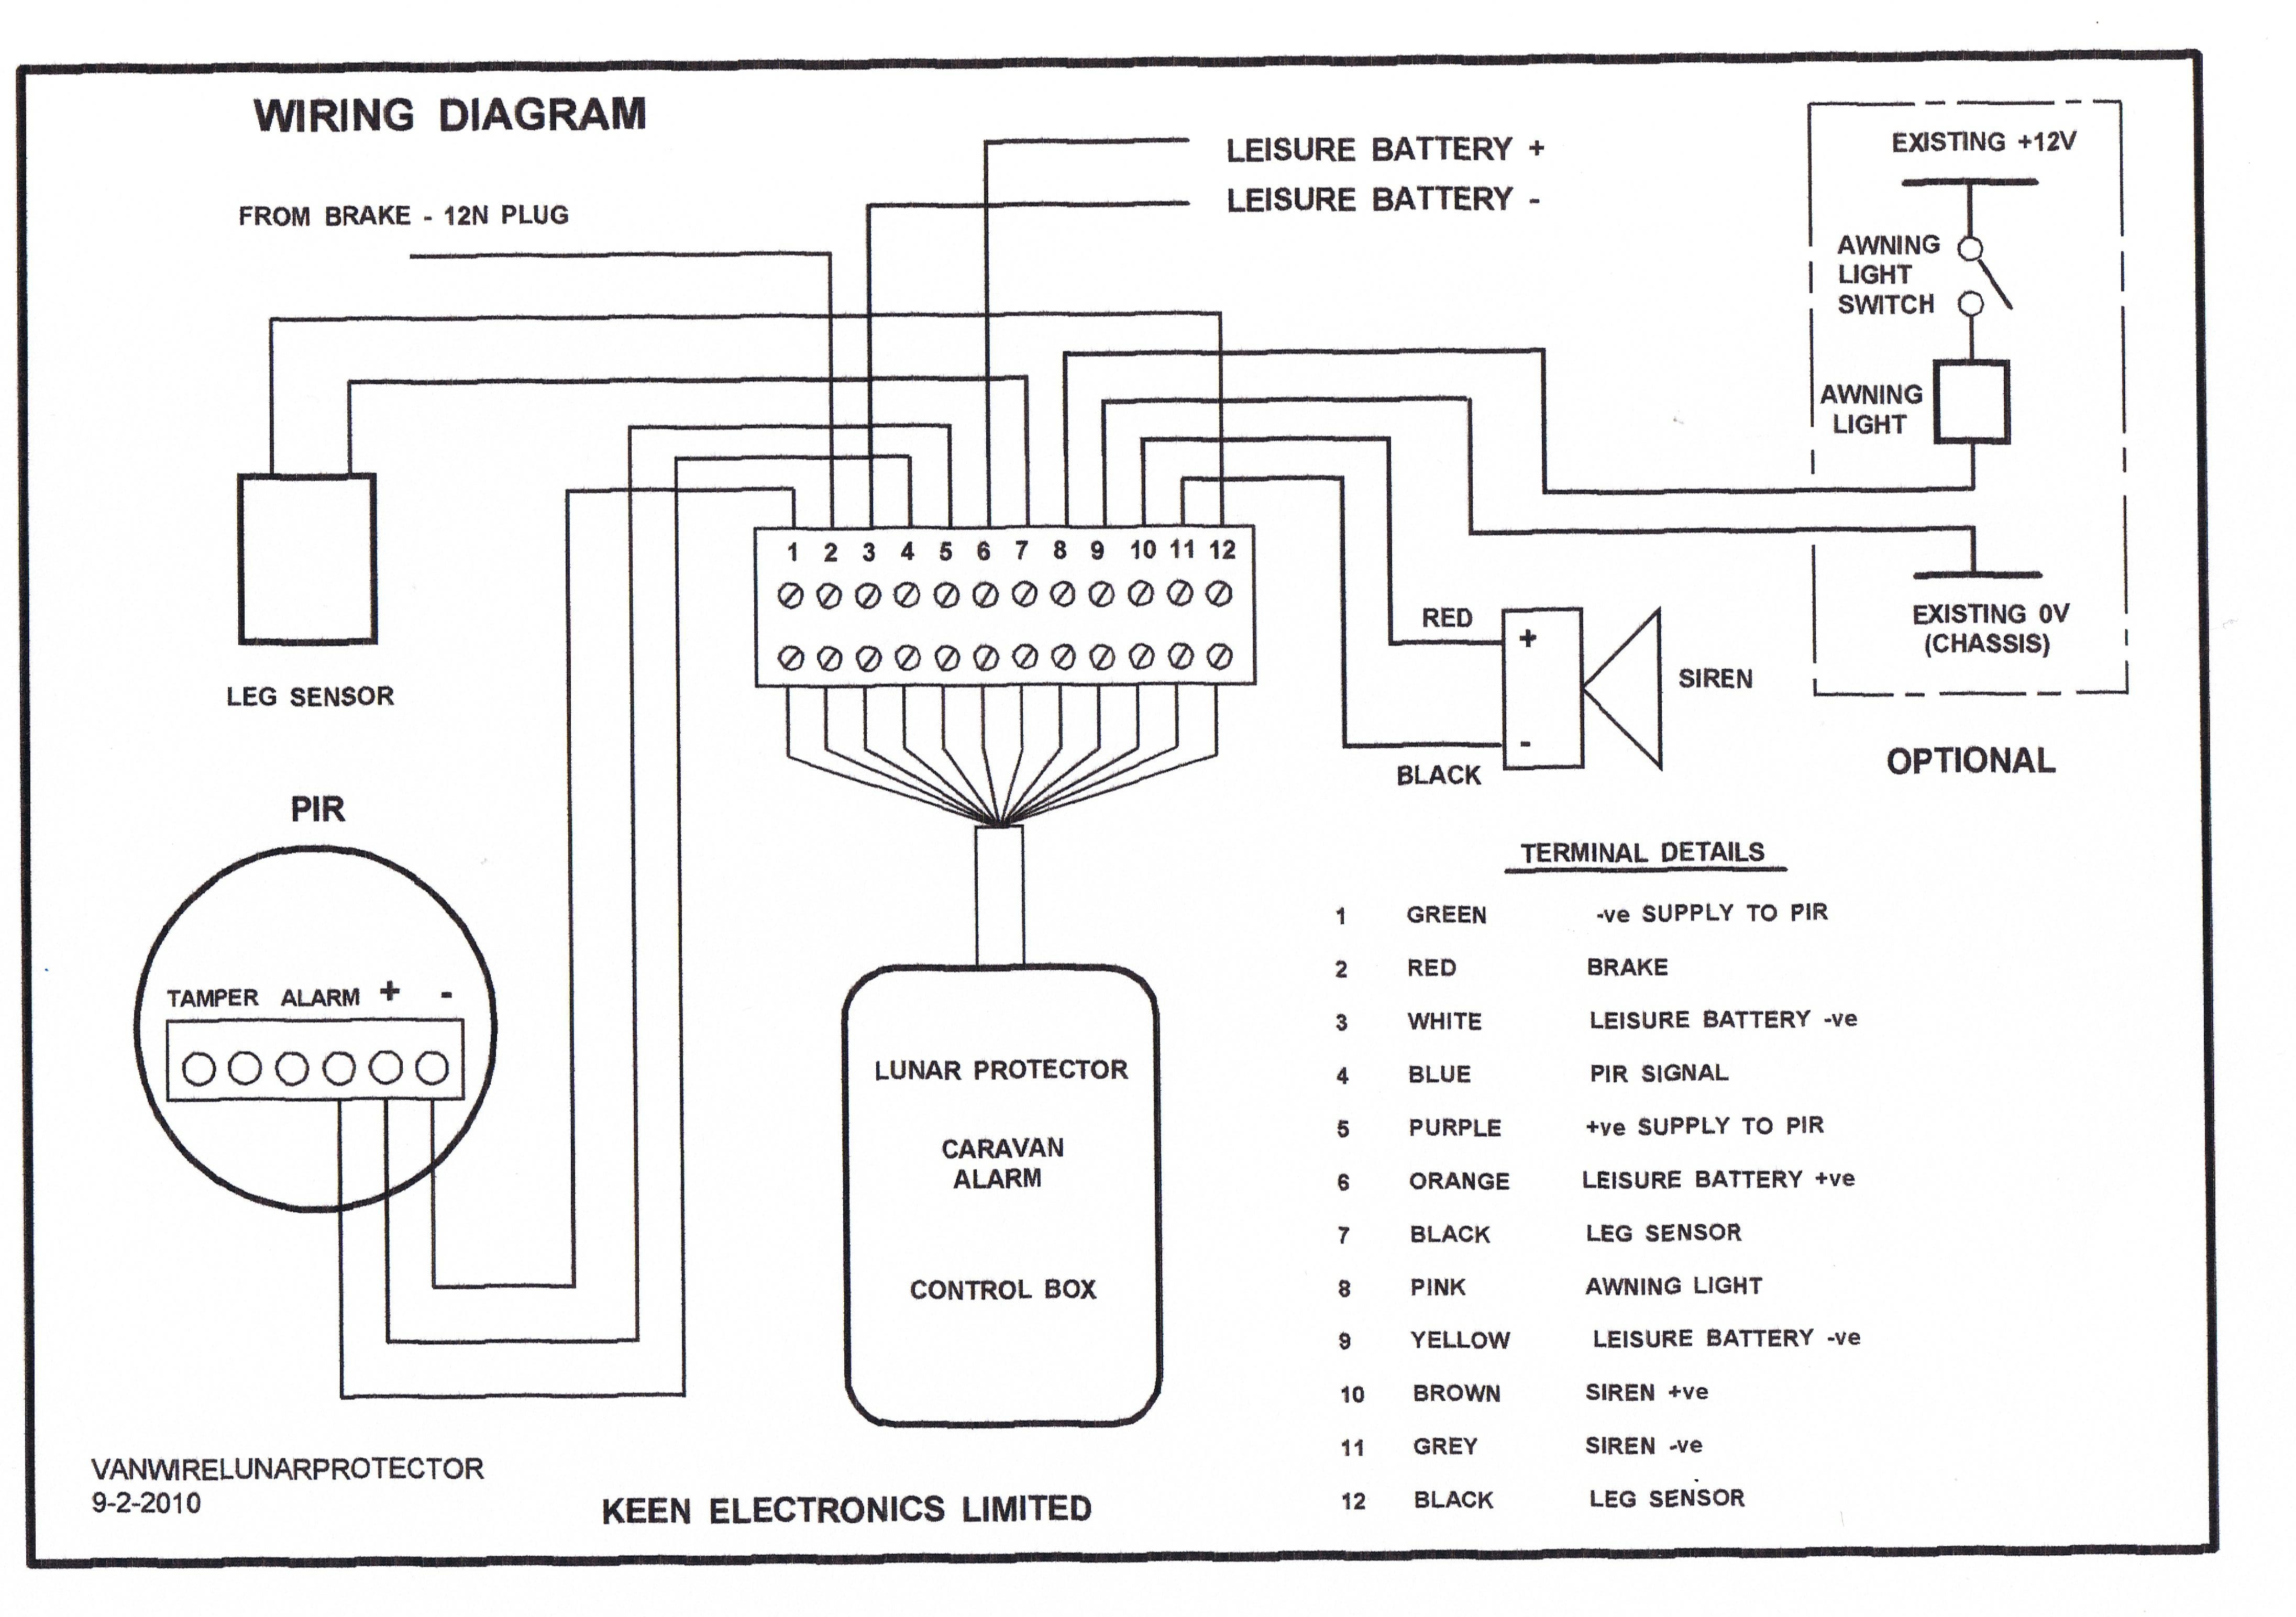 System Sensor Smoke Detector Wiring Diagram Fresh System Sensor Smoke Detector Wiring Diagram Free Downloads Alarm